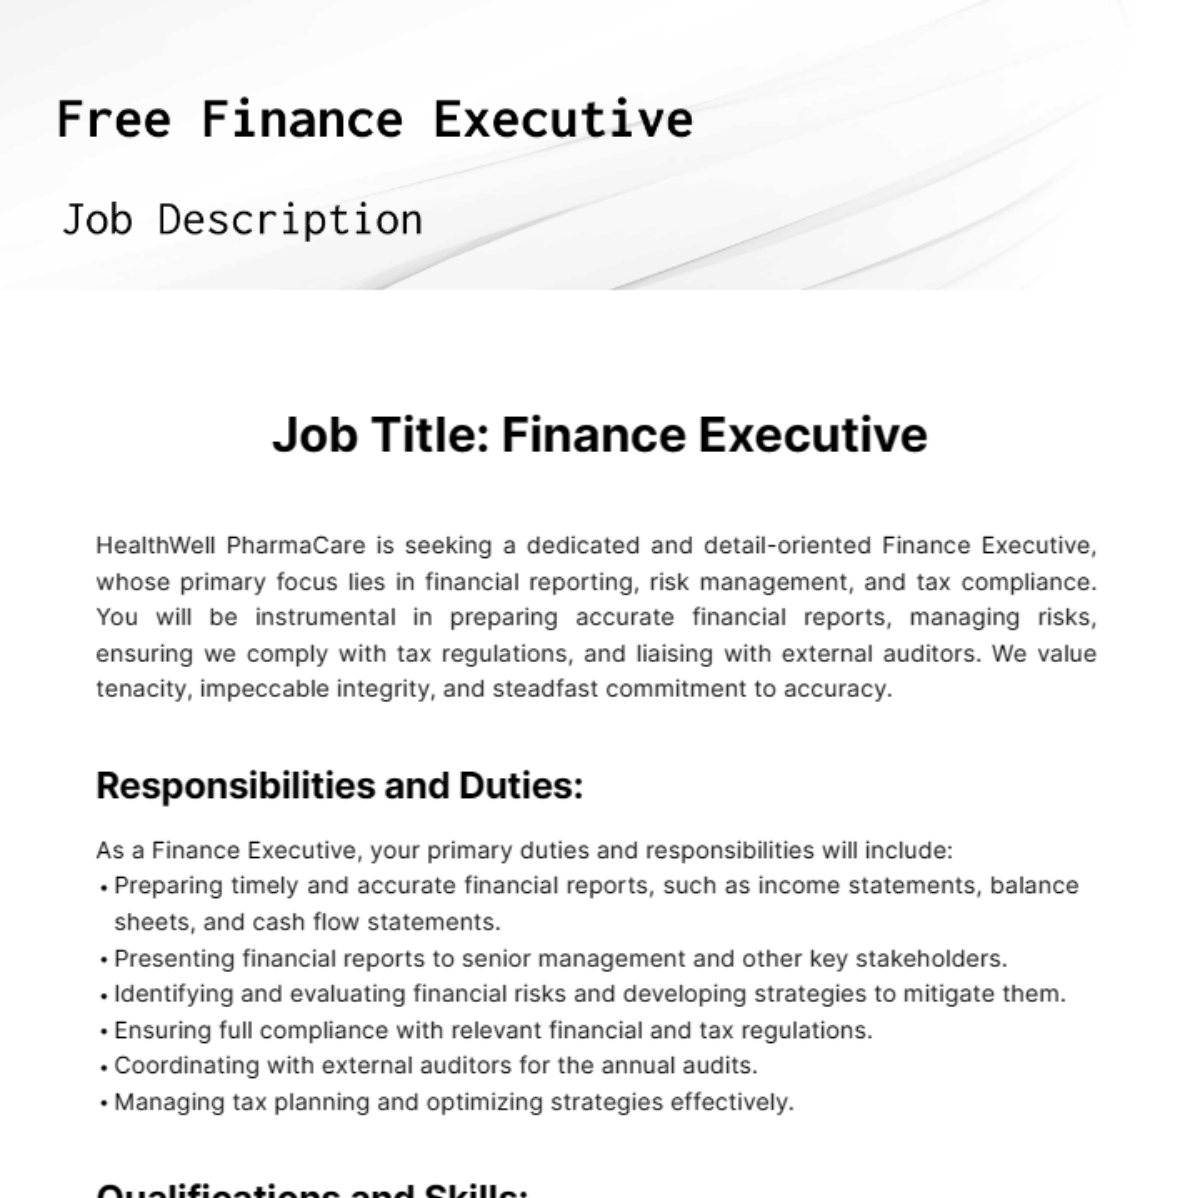 Free Finance Executive Job Description Template